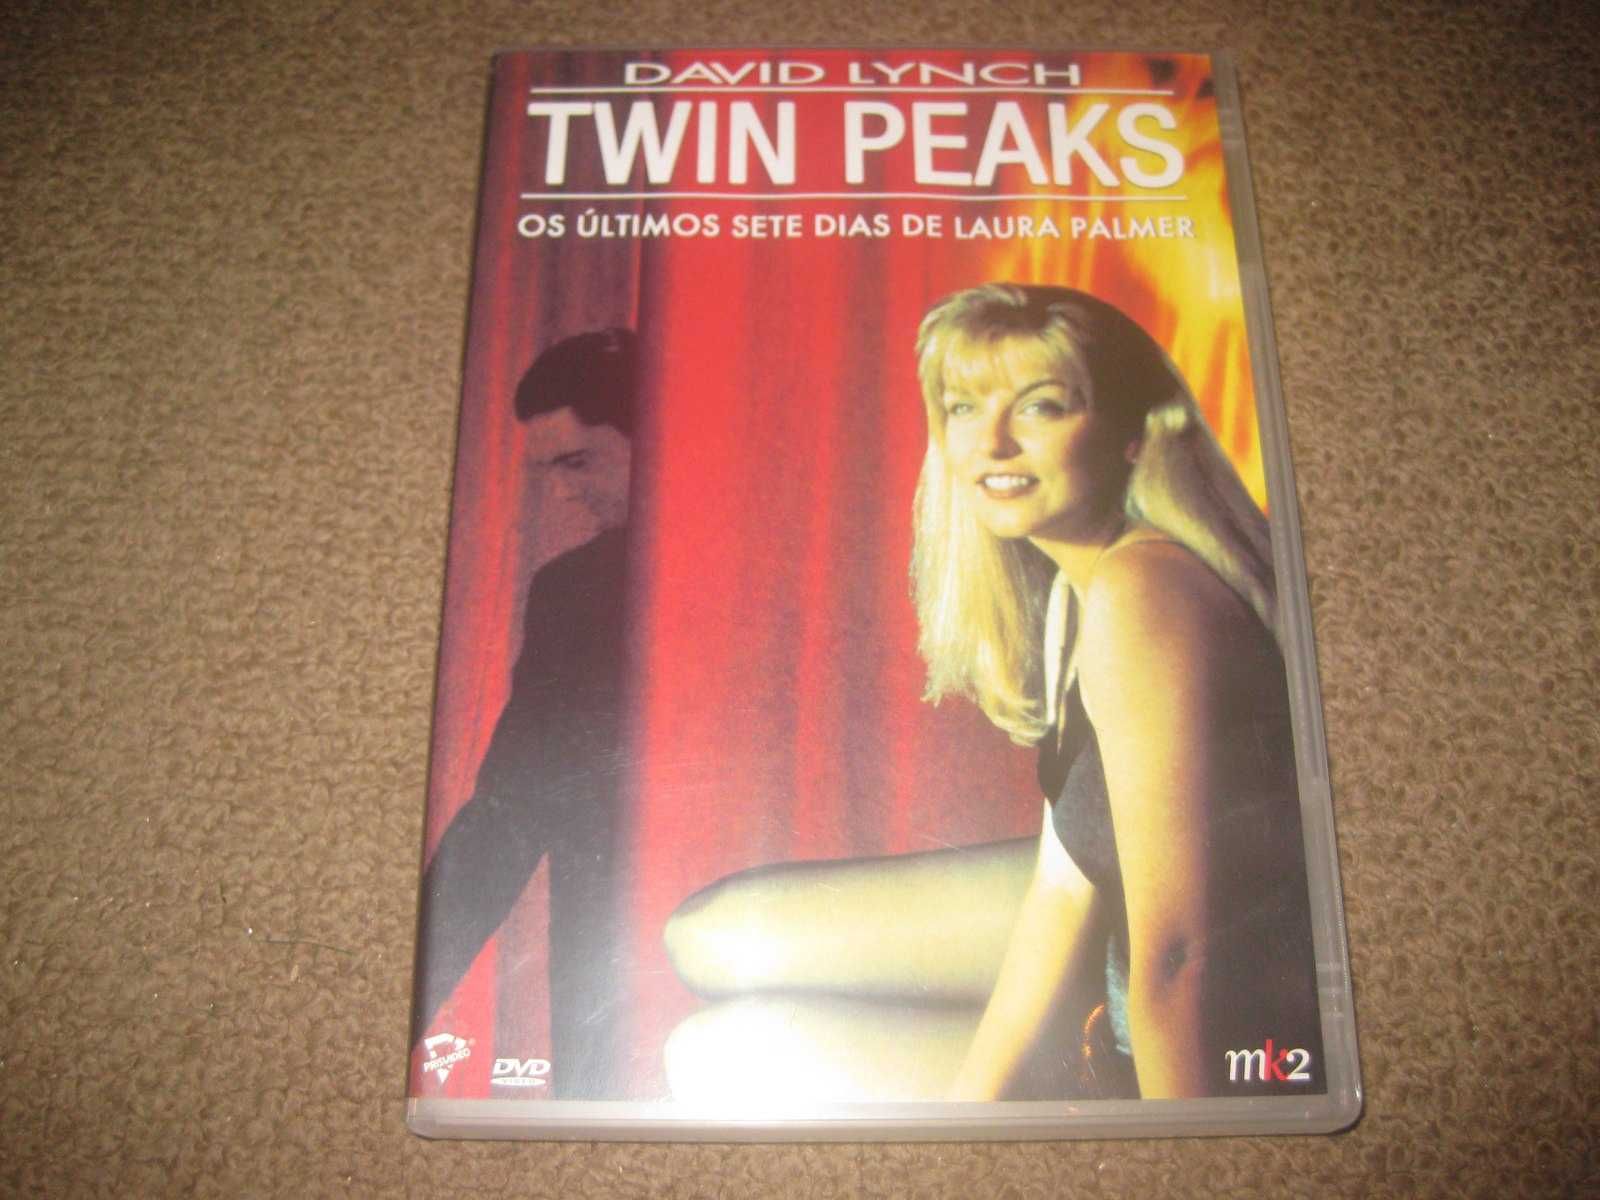 DVD "Twin Peaks: Os Últimos Sete Dias de Laura Palmer" de David Lynch